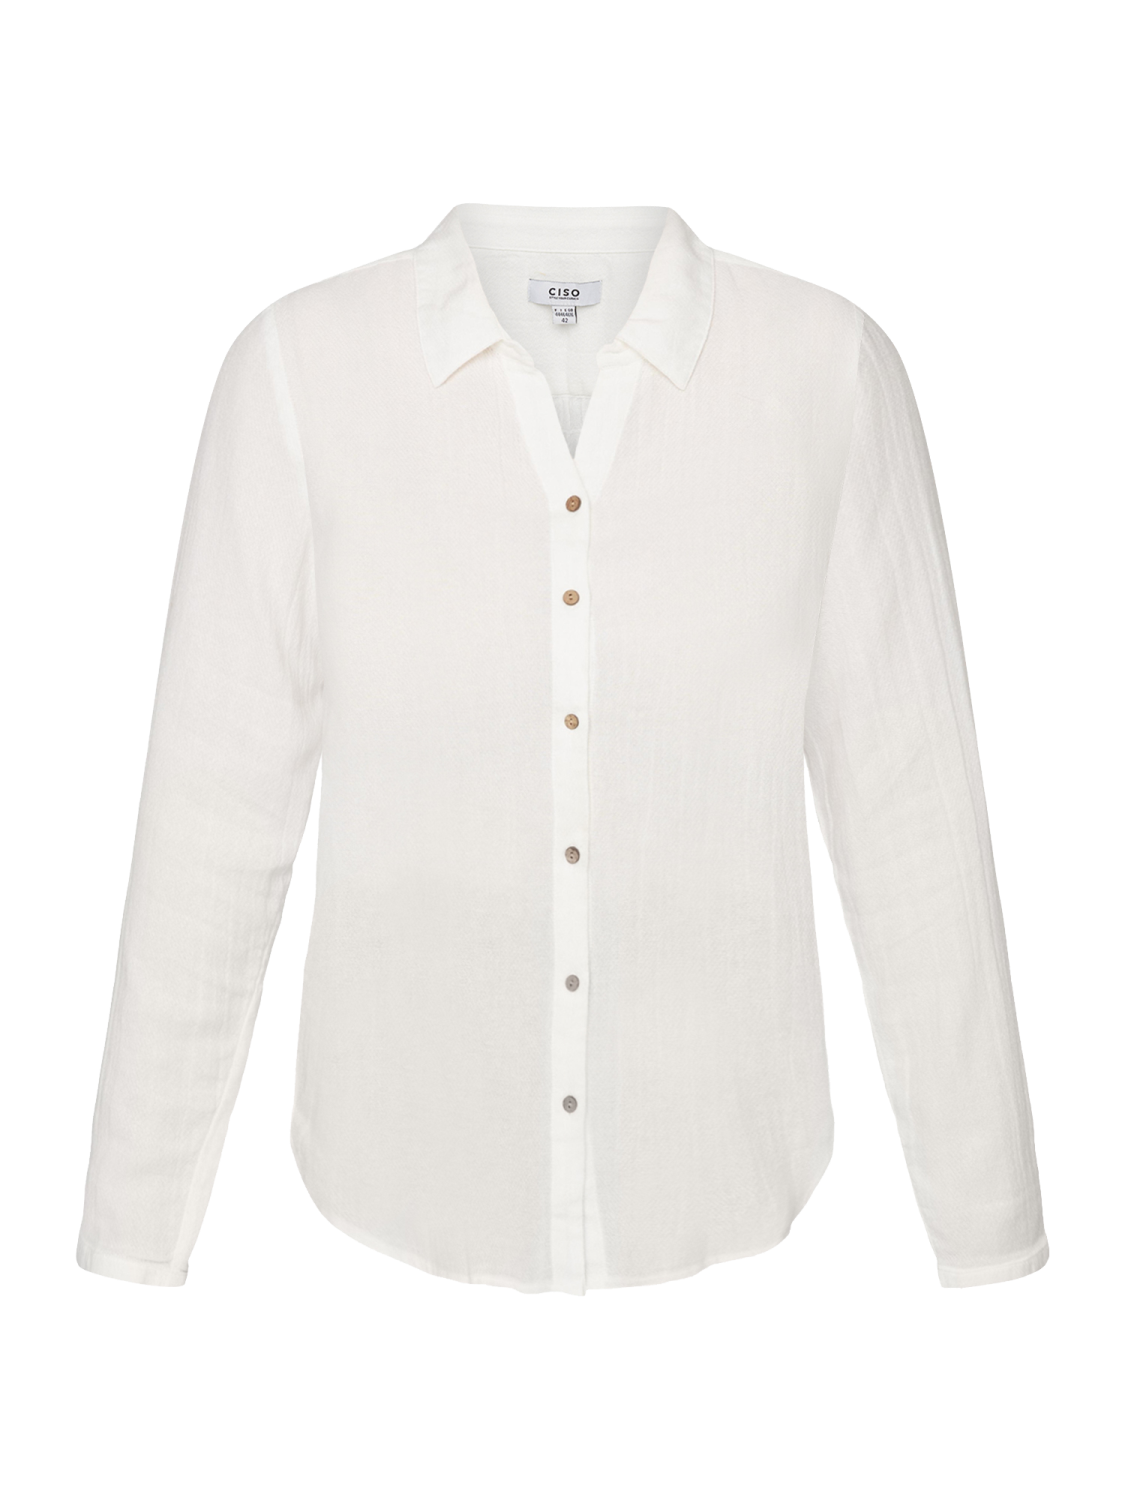 Ciso Shirt, skjorte med V-hals, hvit